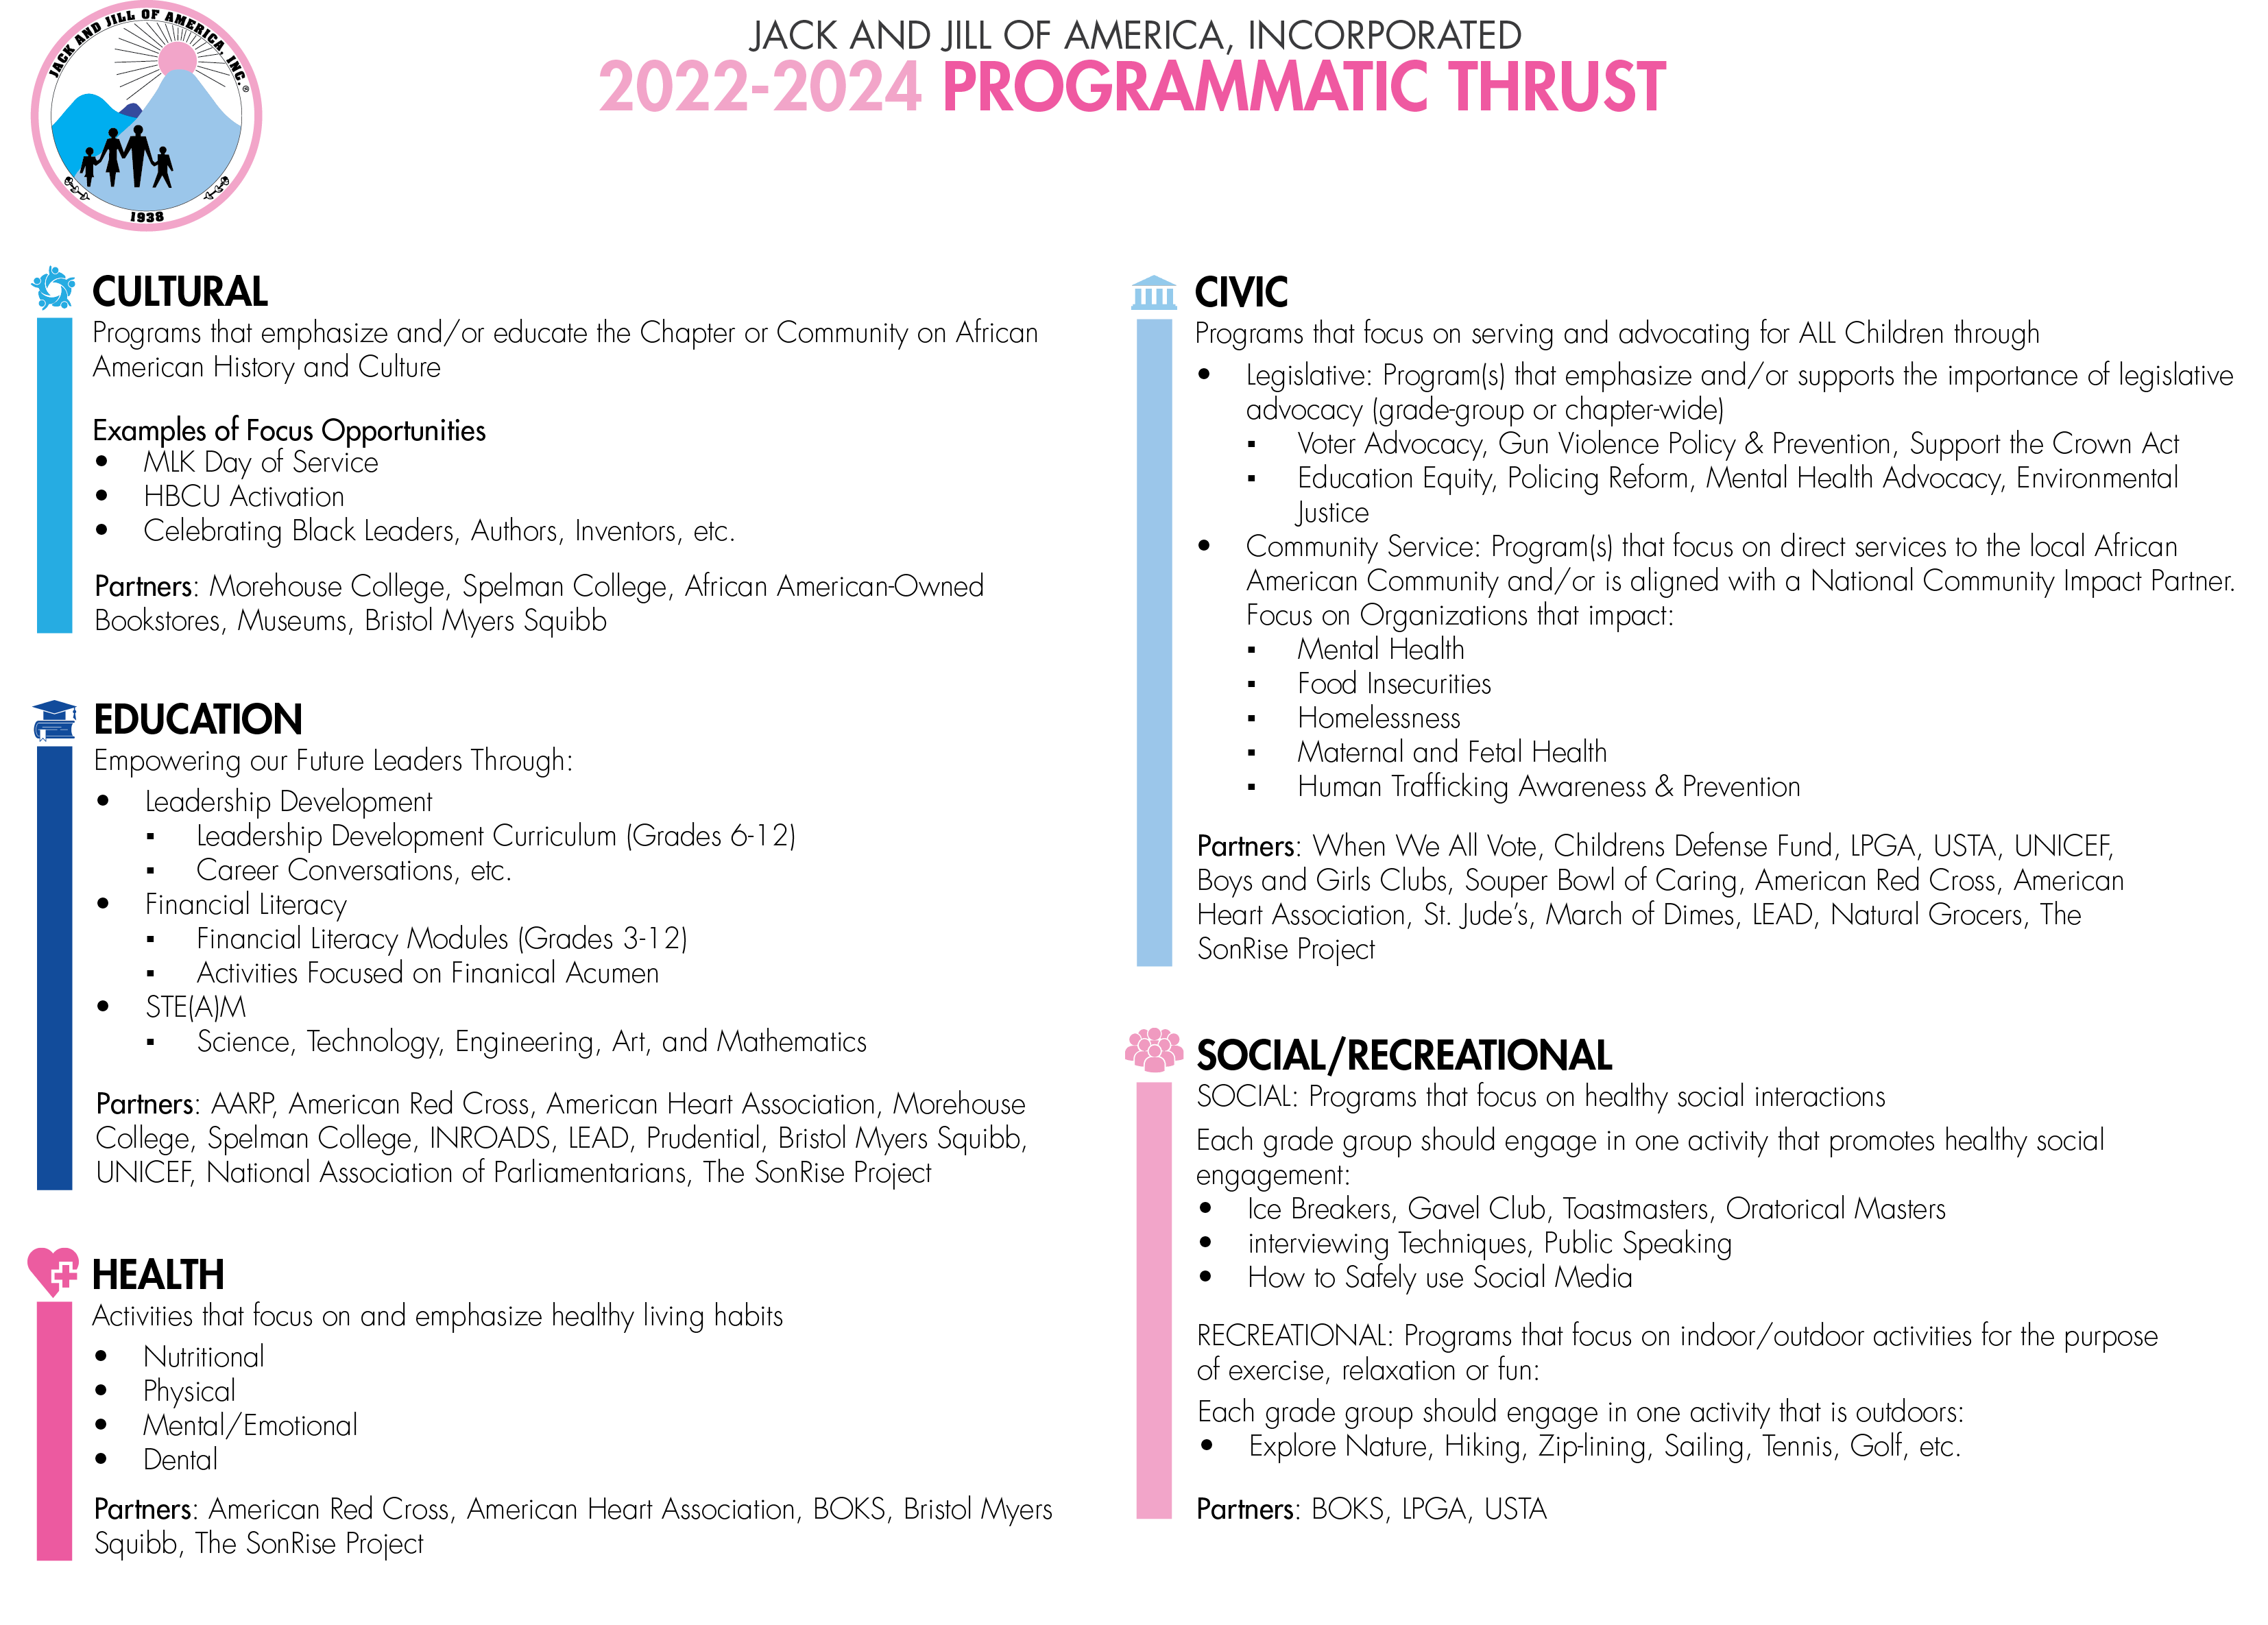 2020-2022 Programmatic Thrust